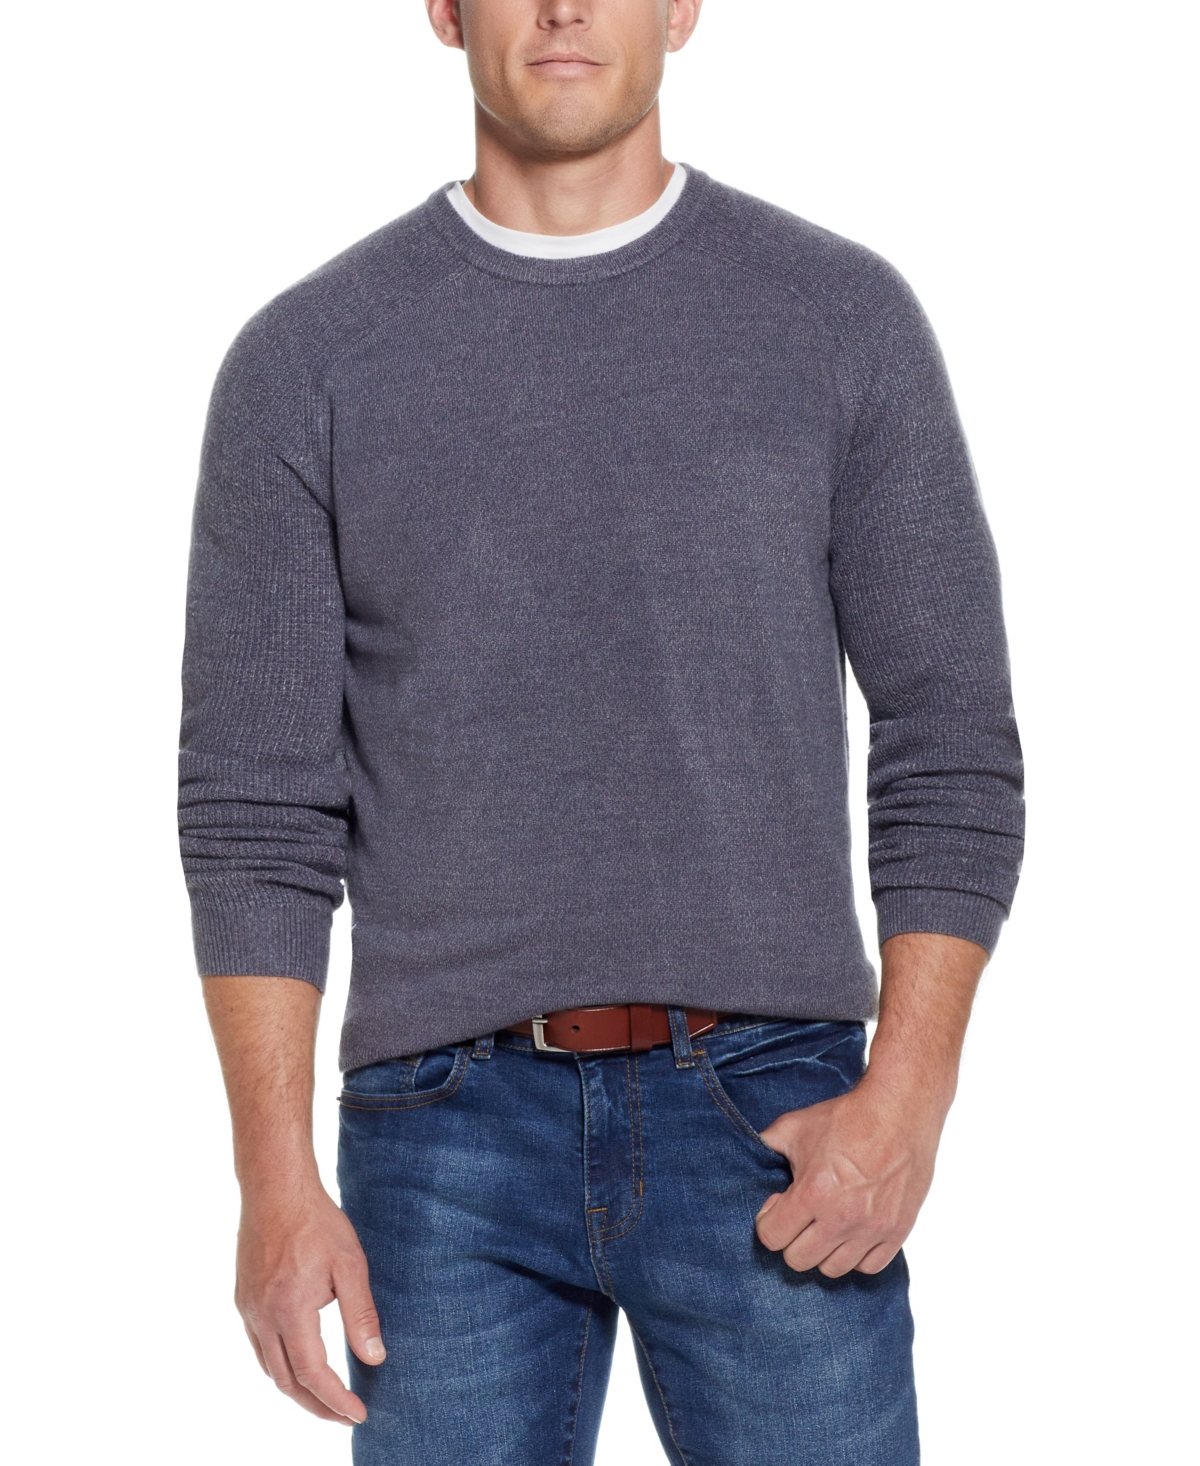 Weatherproof Vintage Men's Soft Touch Raglan Crew Neck Sweater In Gray Blue